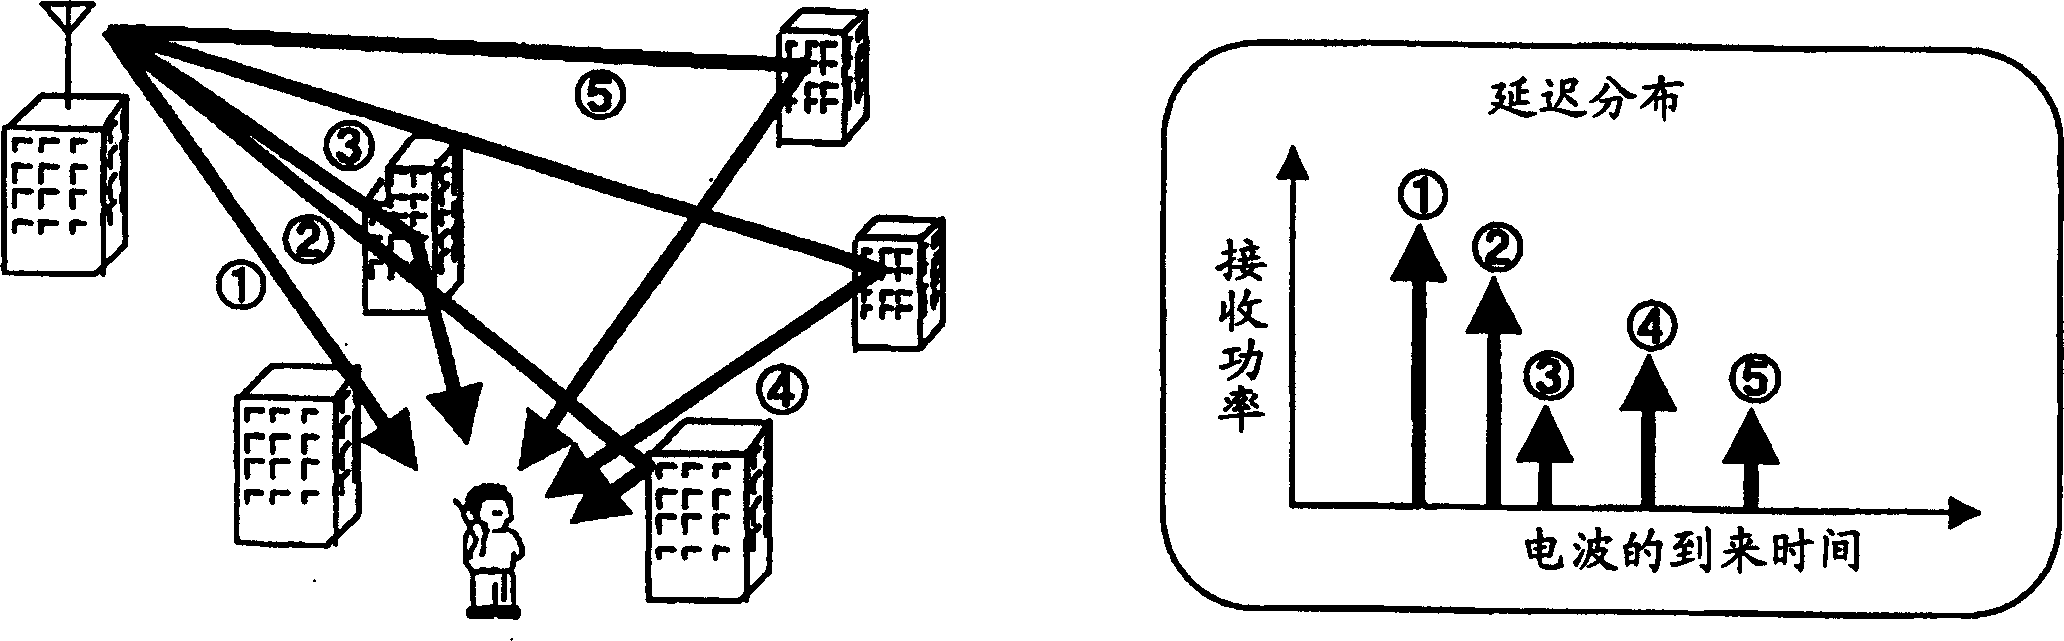 Multi-path generating apparatus, a multi-path fading simulator, and a multi-path generating method